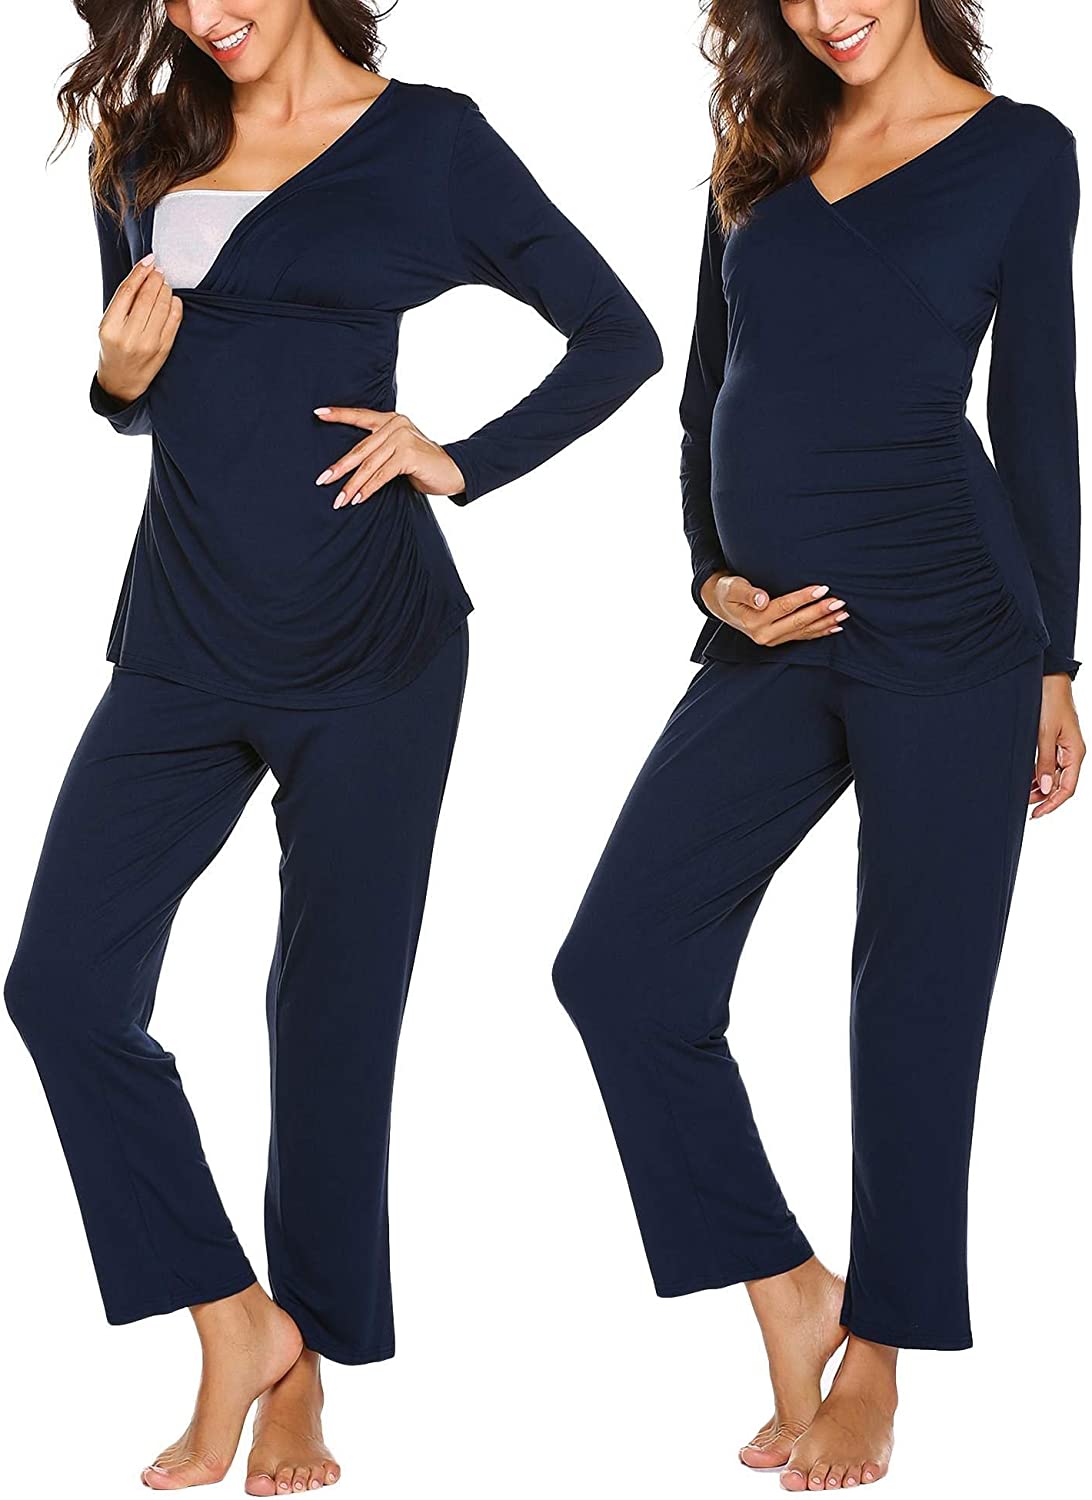 Ekouaer Womens Maternity Nursing Pajamas Modal Sleepwear Set Soft Pregnancy Breastfeeding Hospital PJ Sets Black L 